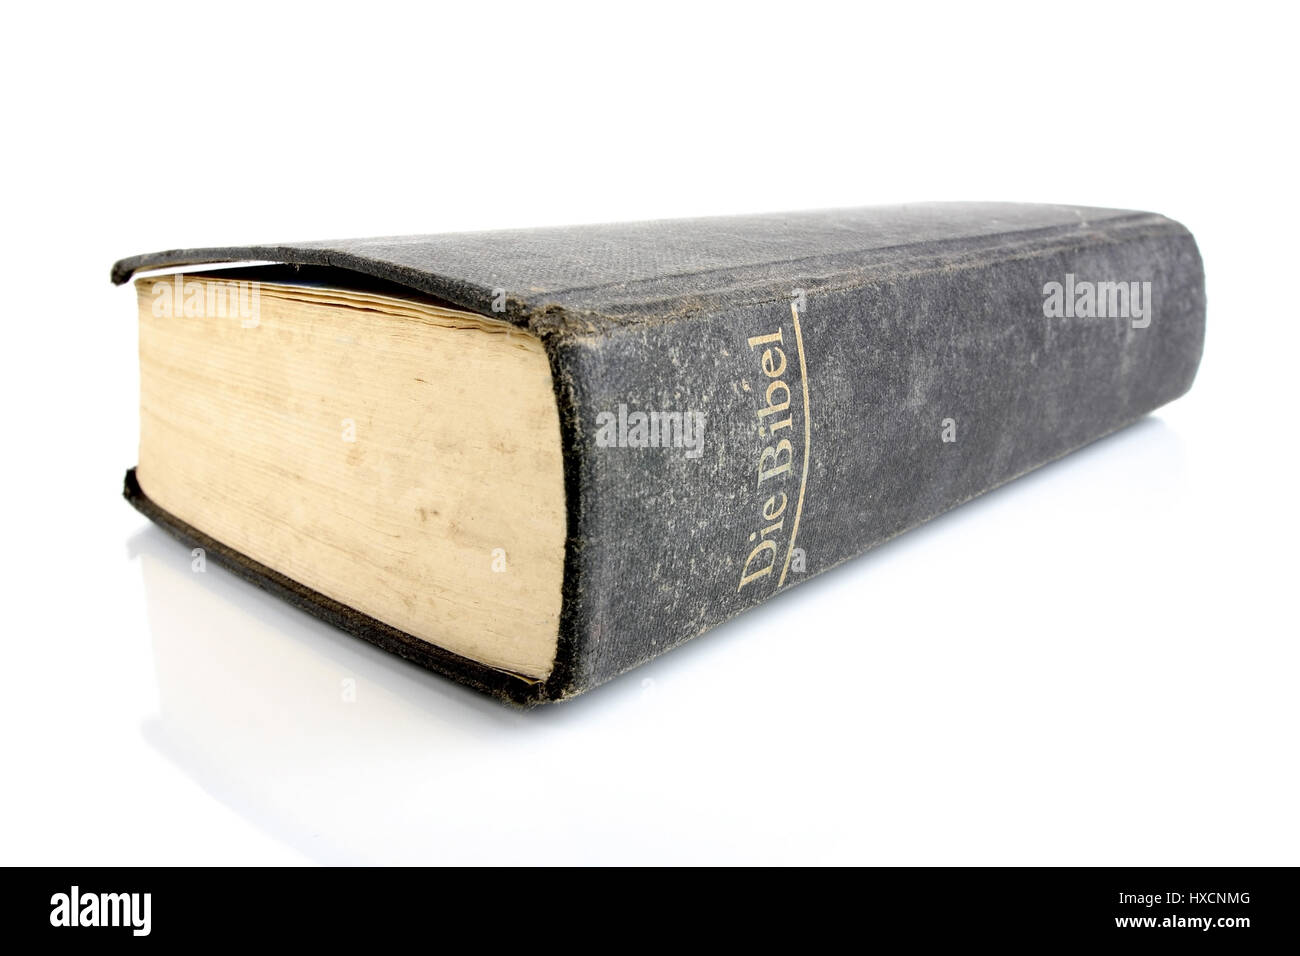 The Bible, The Bible |, Die Bibel |The Bible| Stock Photo